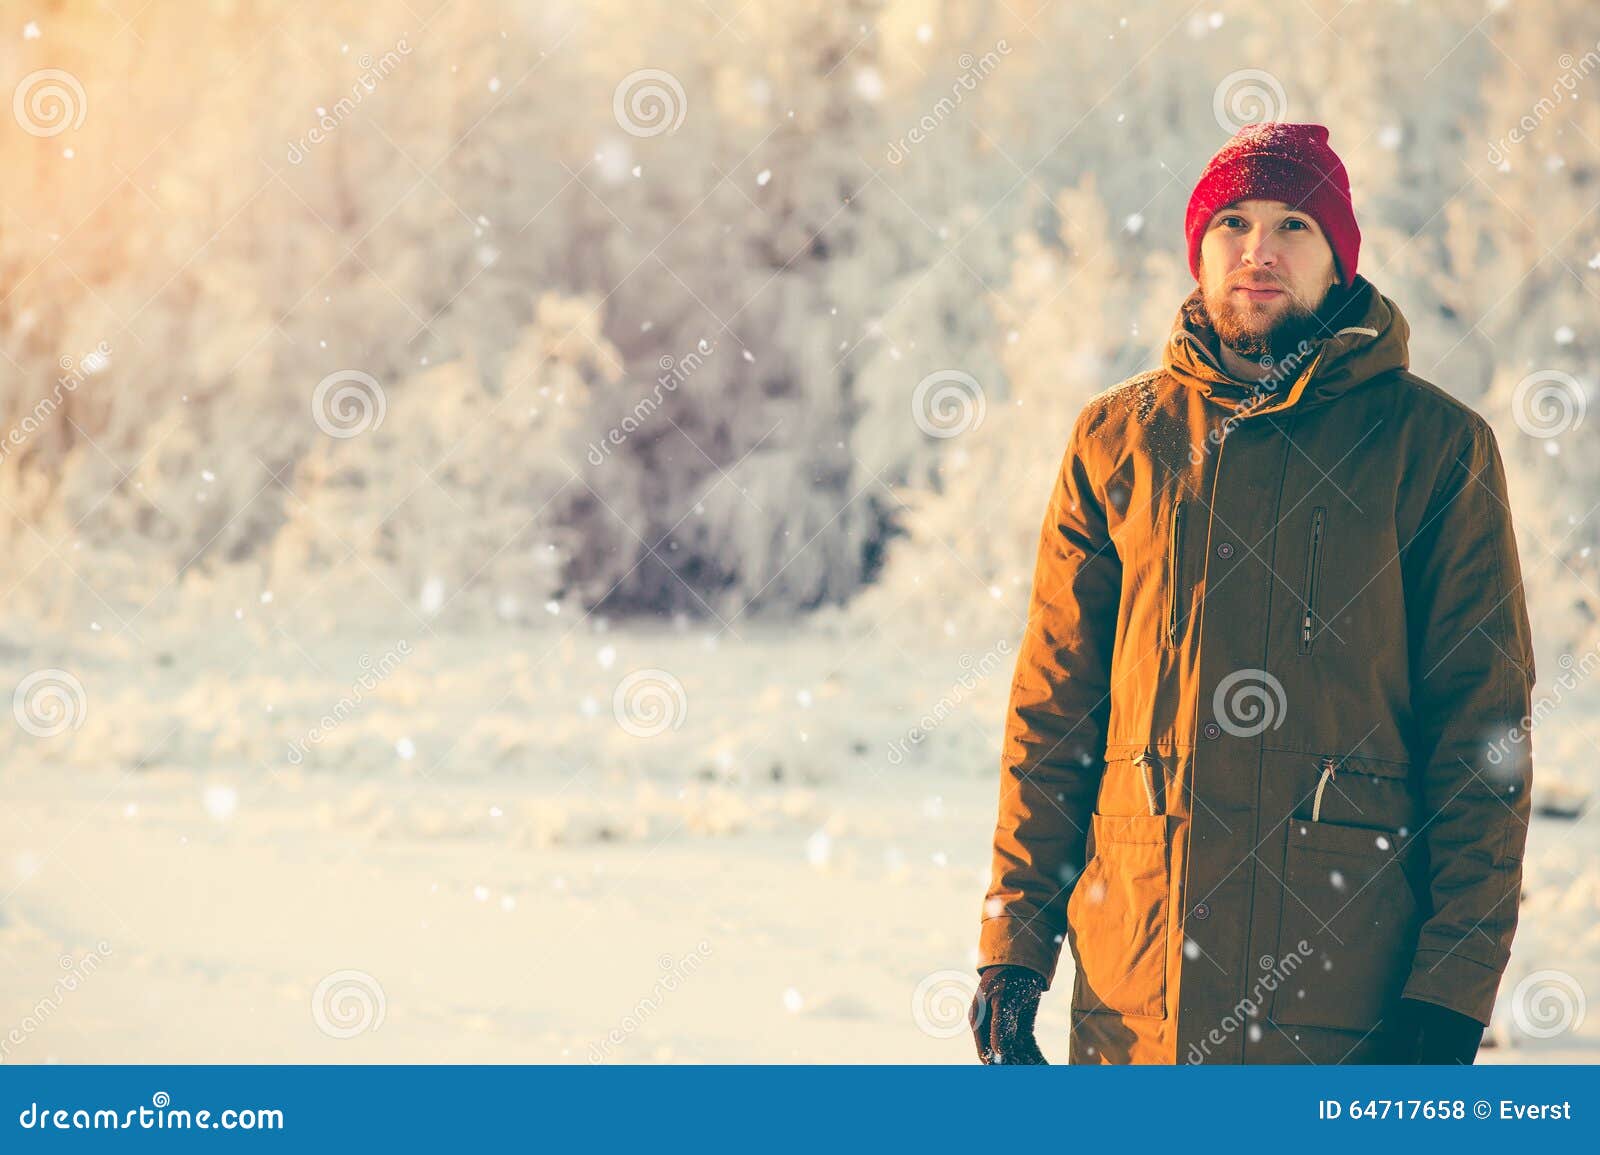 Young Man Enjoying Snow Weather Walking Outdoor Stock Photo - Image of ...